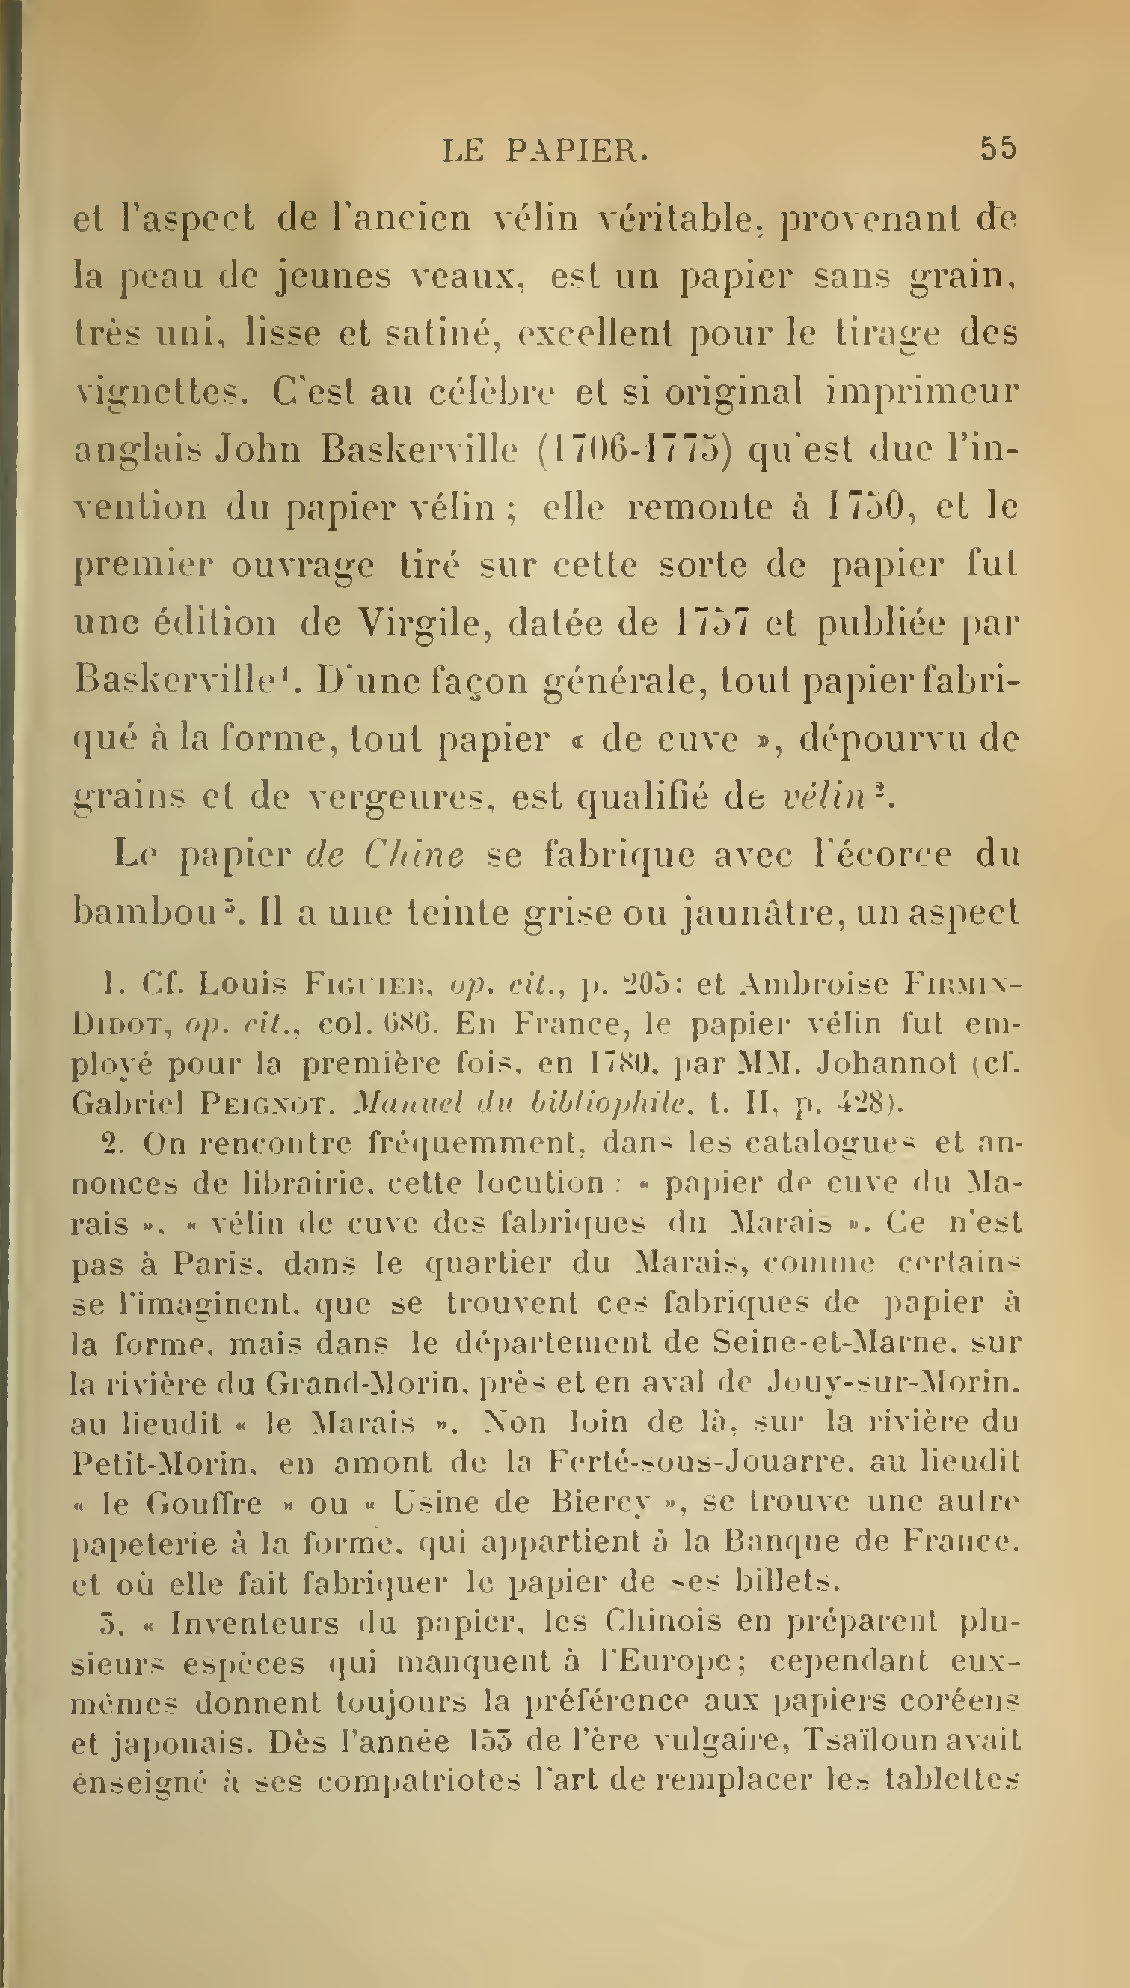 Albert Cim, Le Livre, t. III, p. 55.